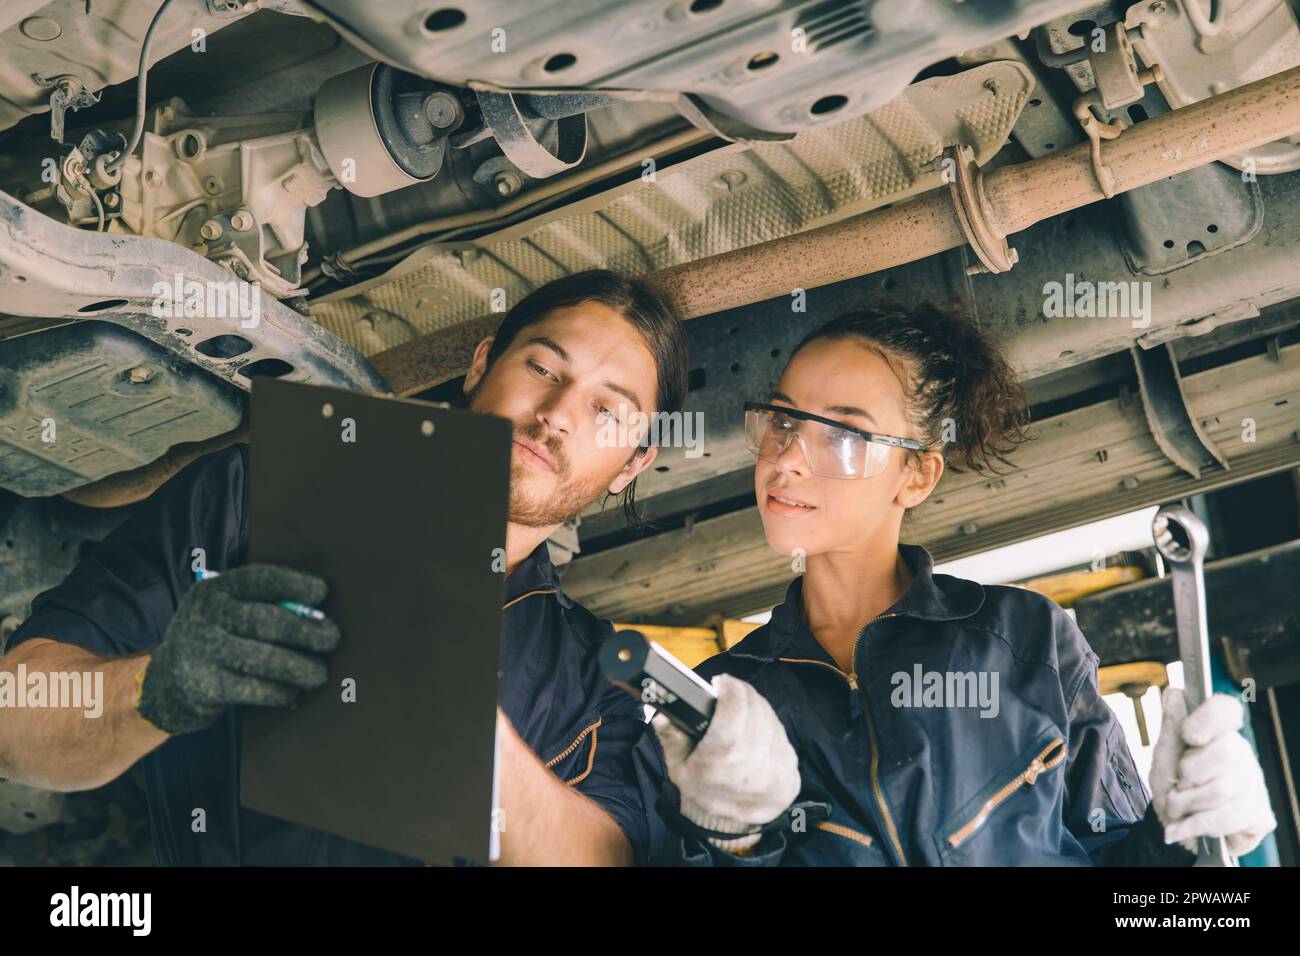 Mechanic service team man and woman working together under car hoist checking list suspension maintenance in garage auto wokshop Stock Photo